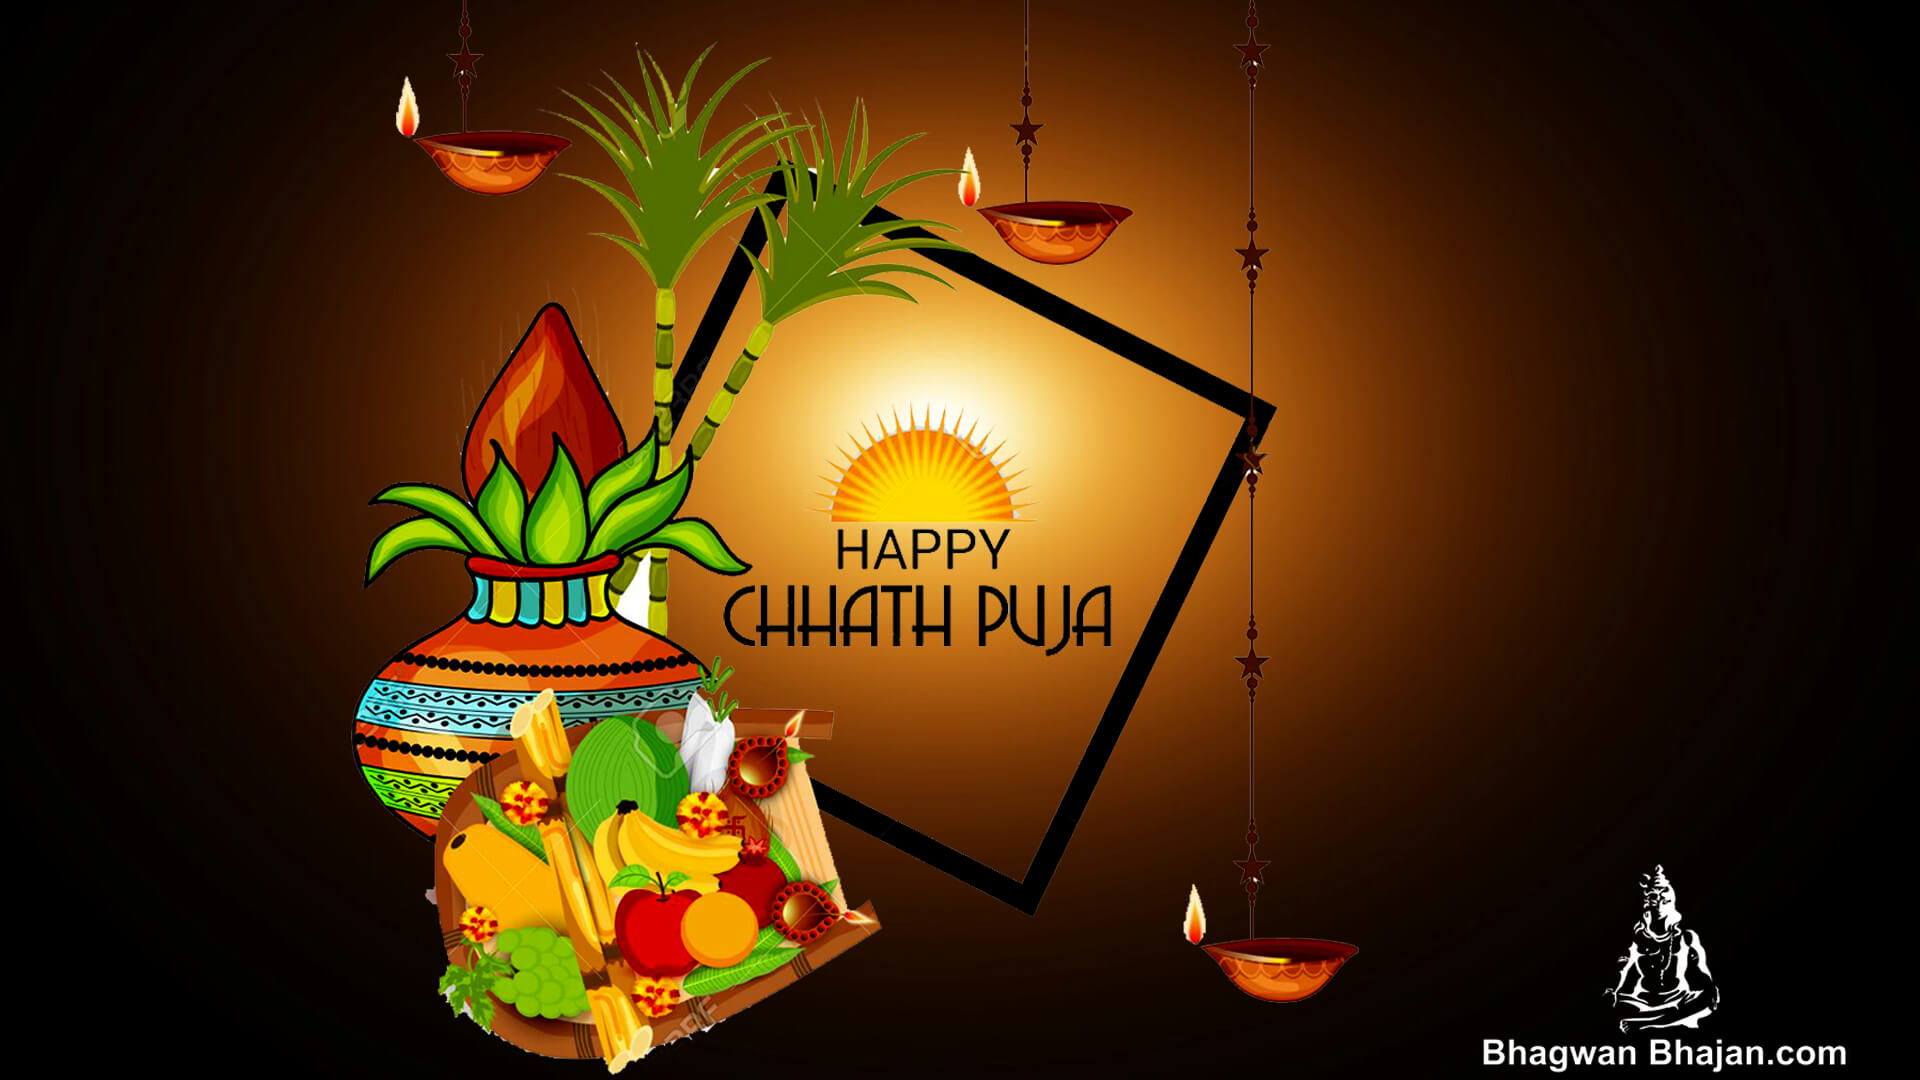 Chhath Puja Images  Free Download on Freepik